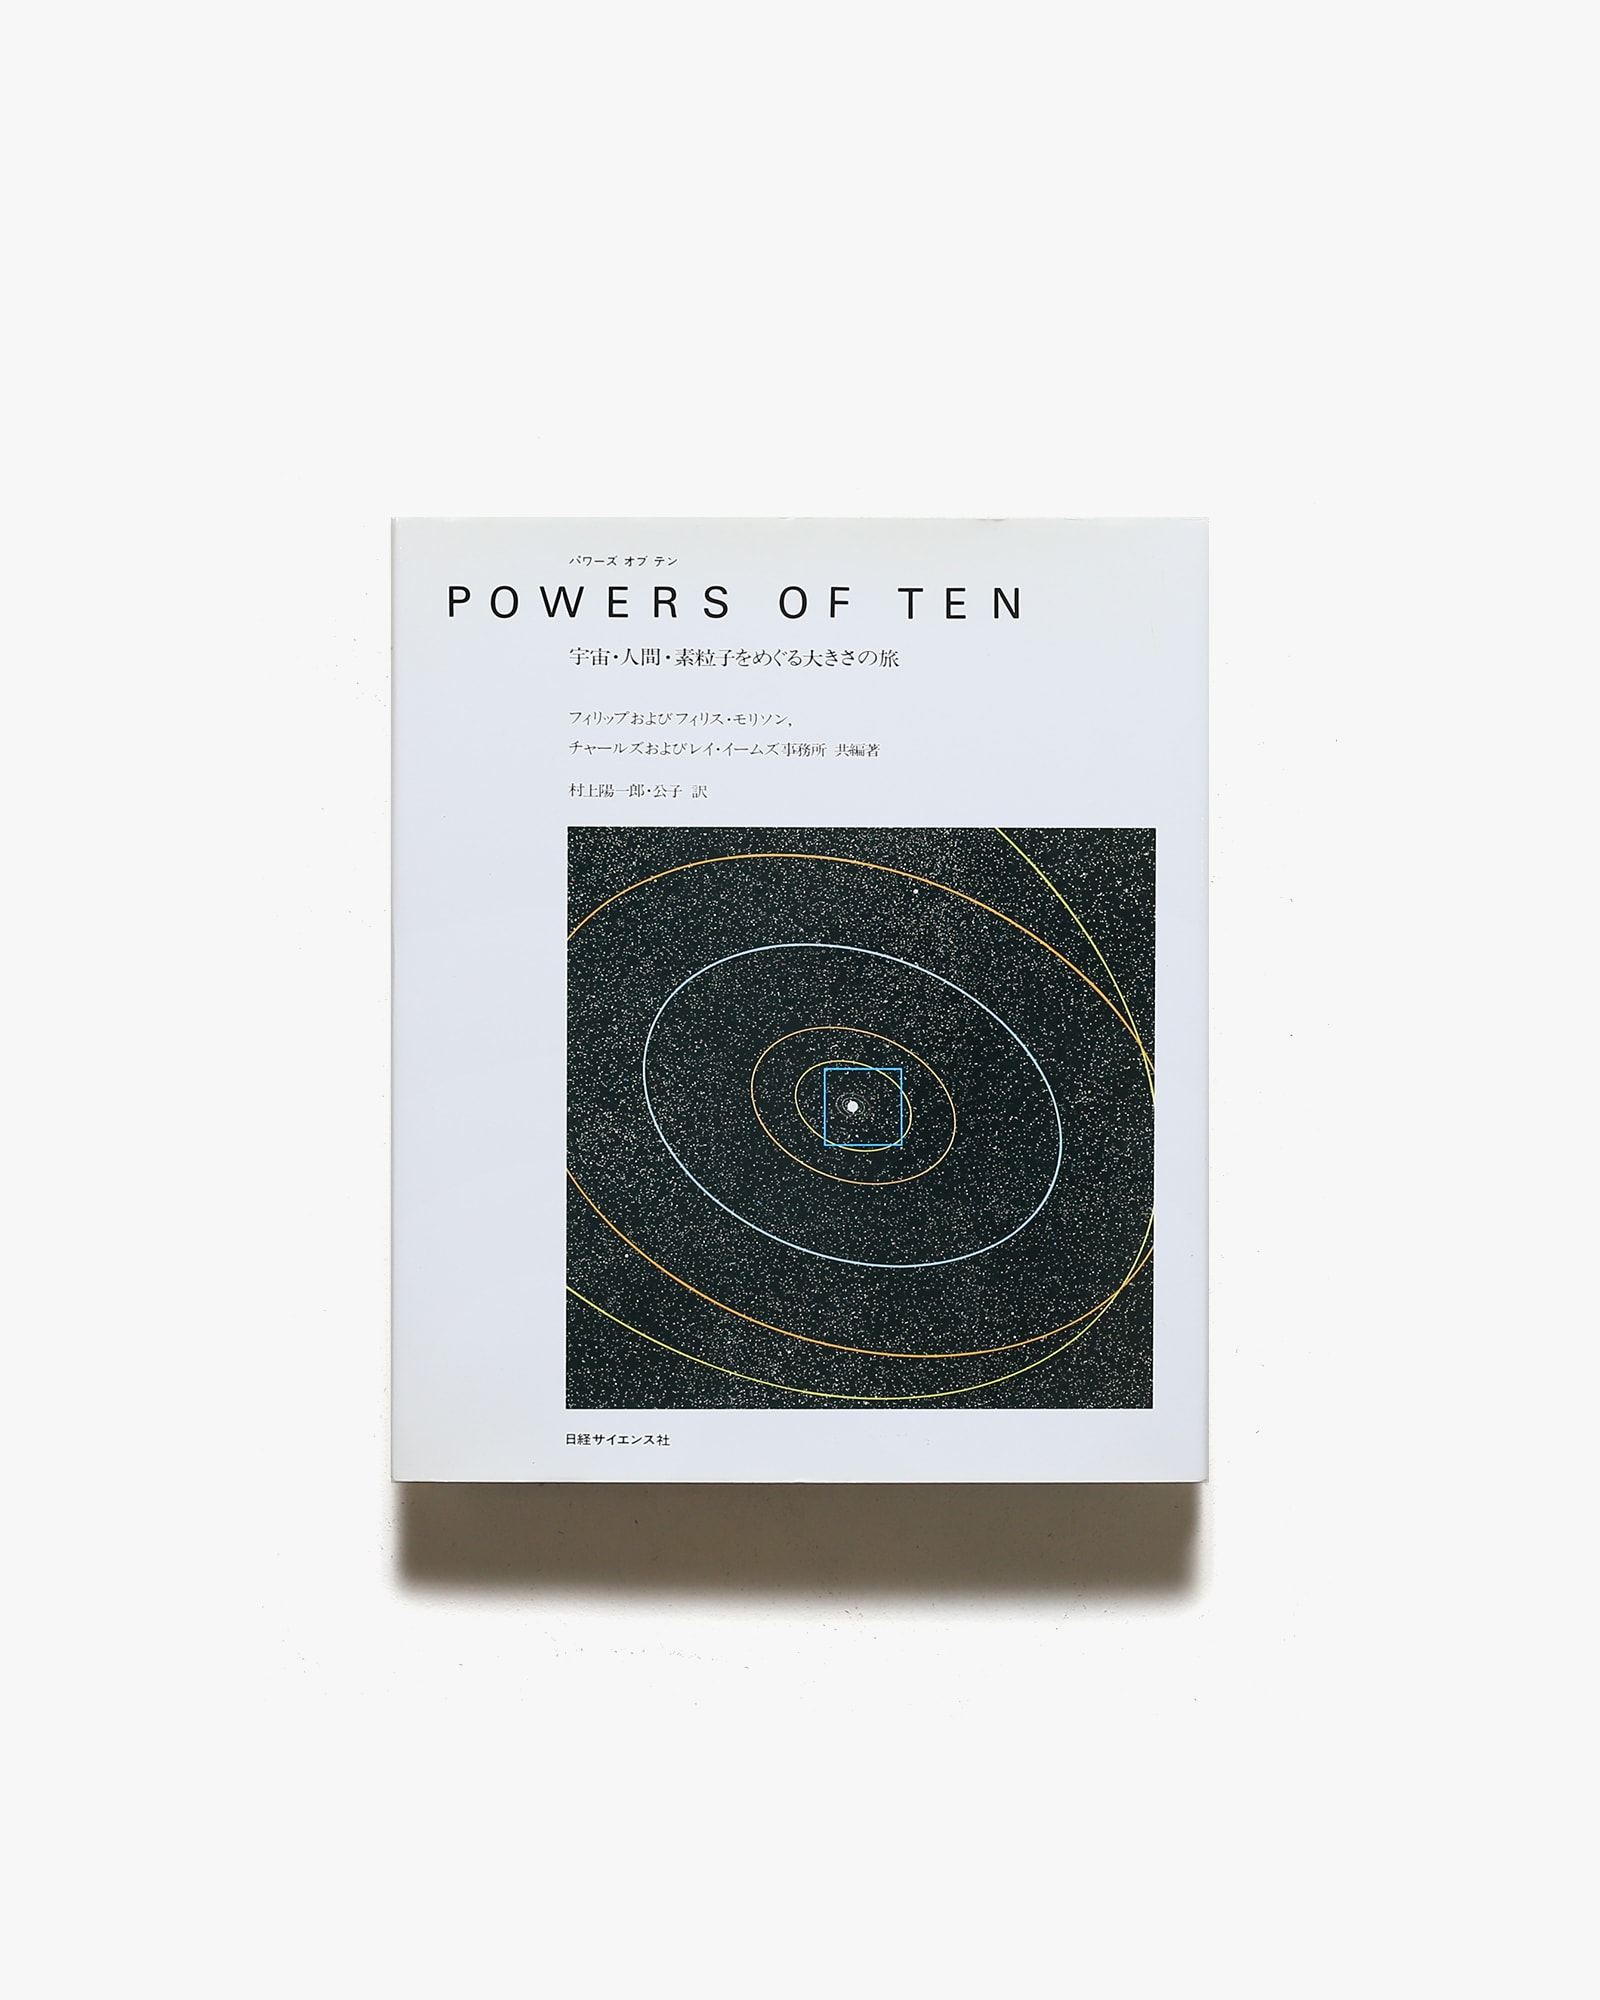 POWERS OF TEN 宇宙・人間・素粒子をめぐる大きな旅